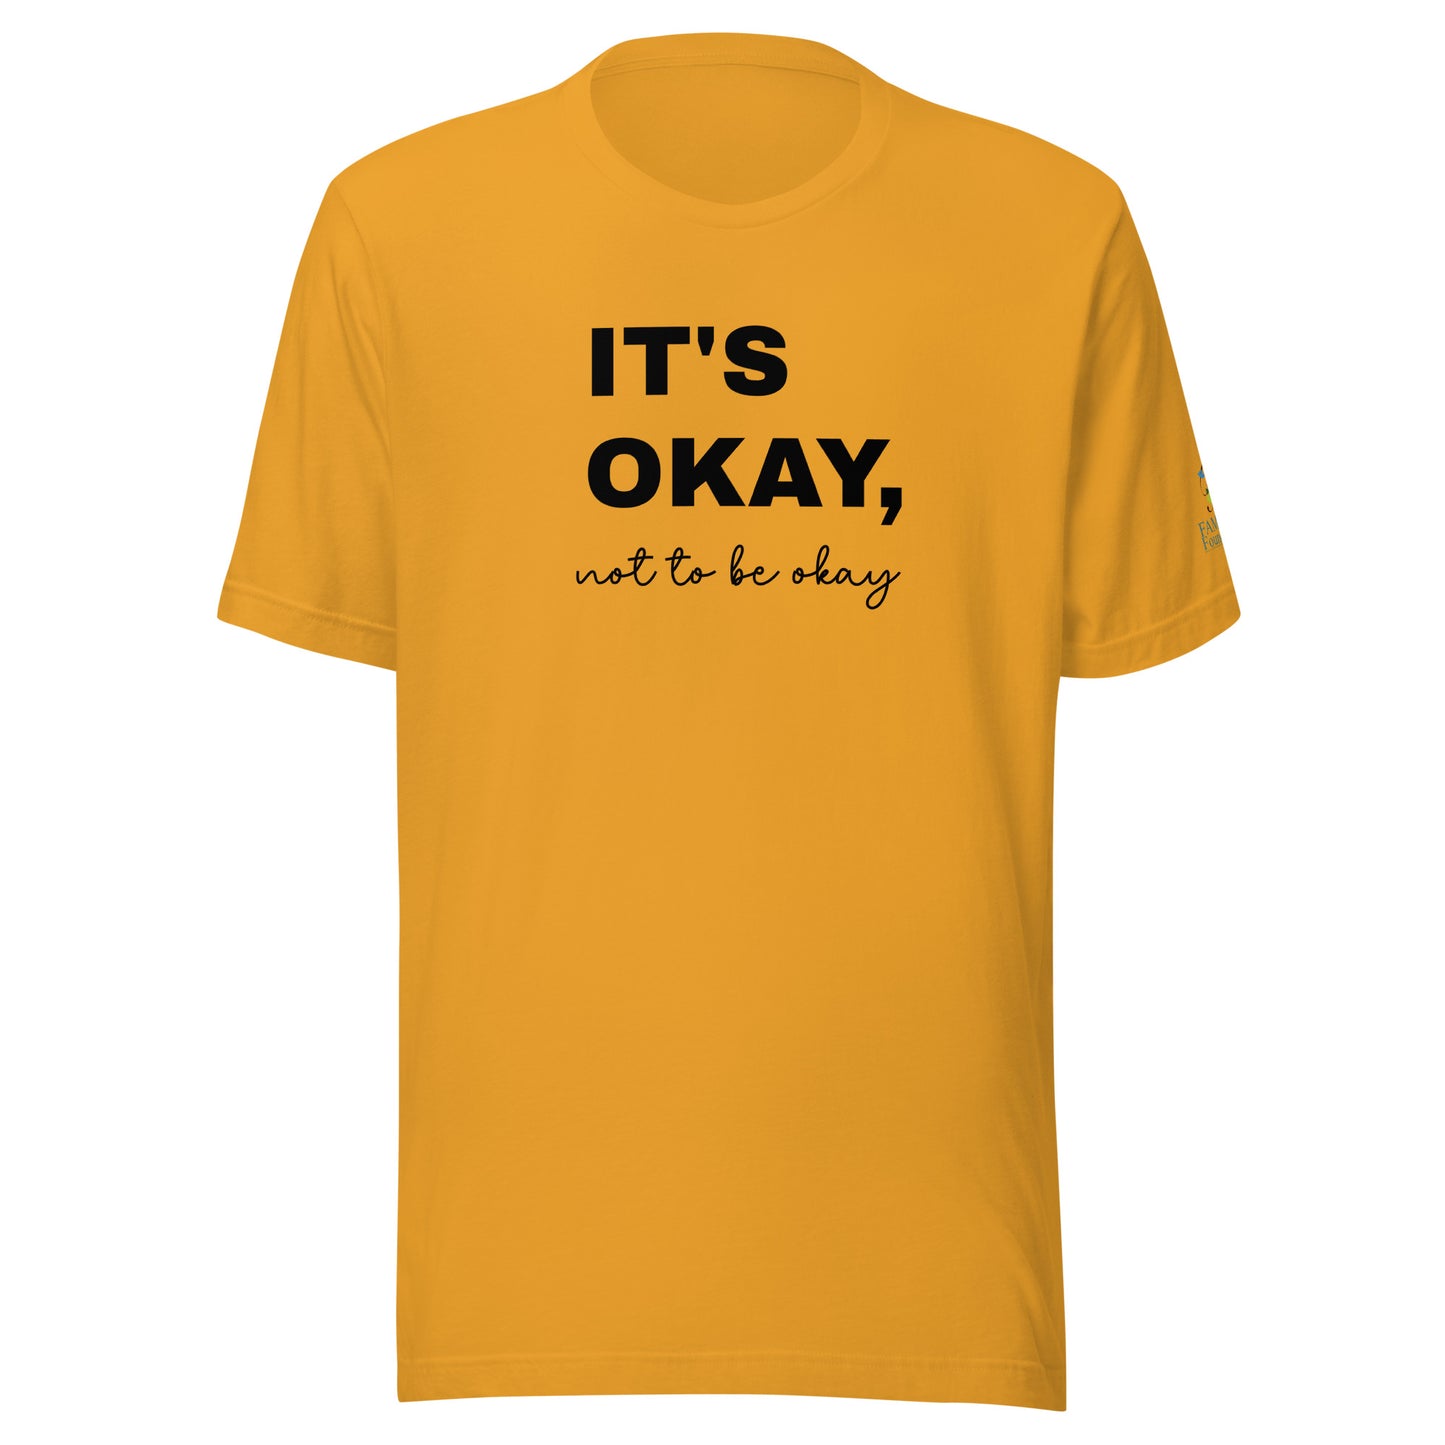 It's okay not to be okay t-shirt